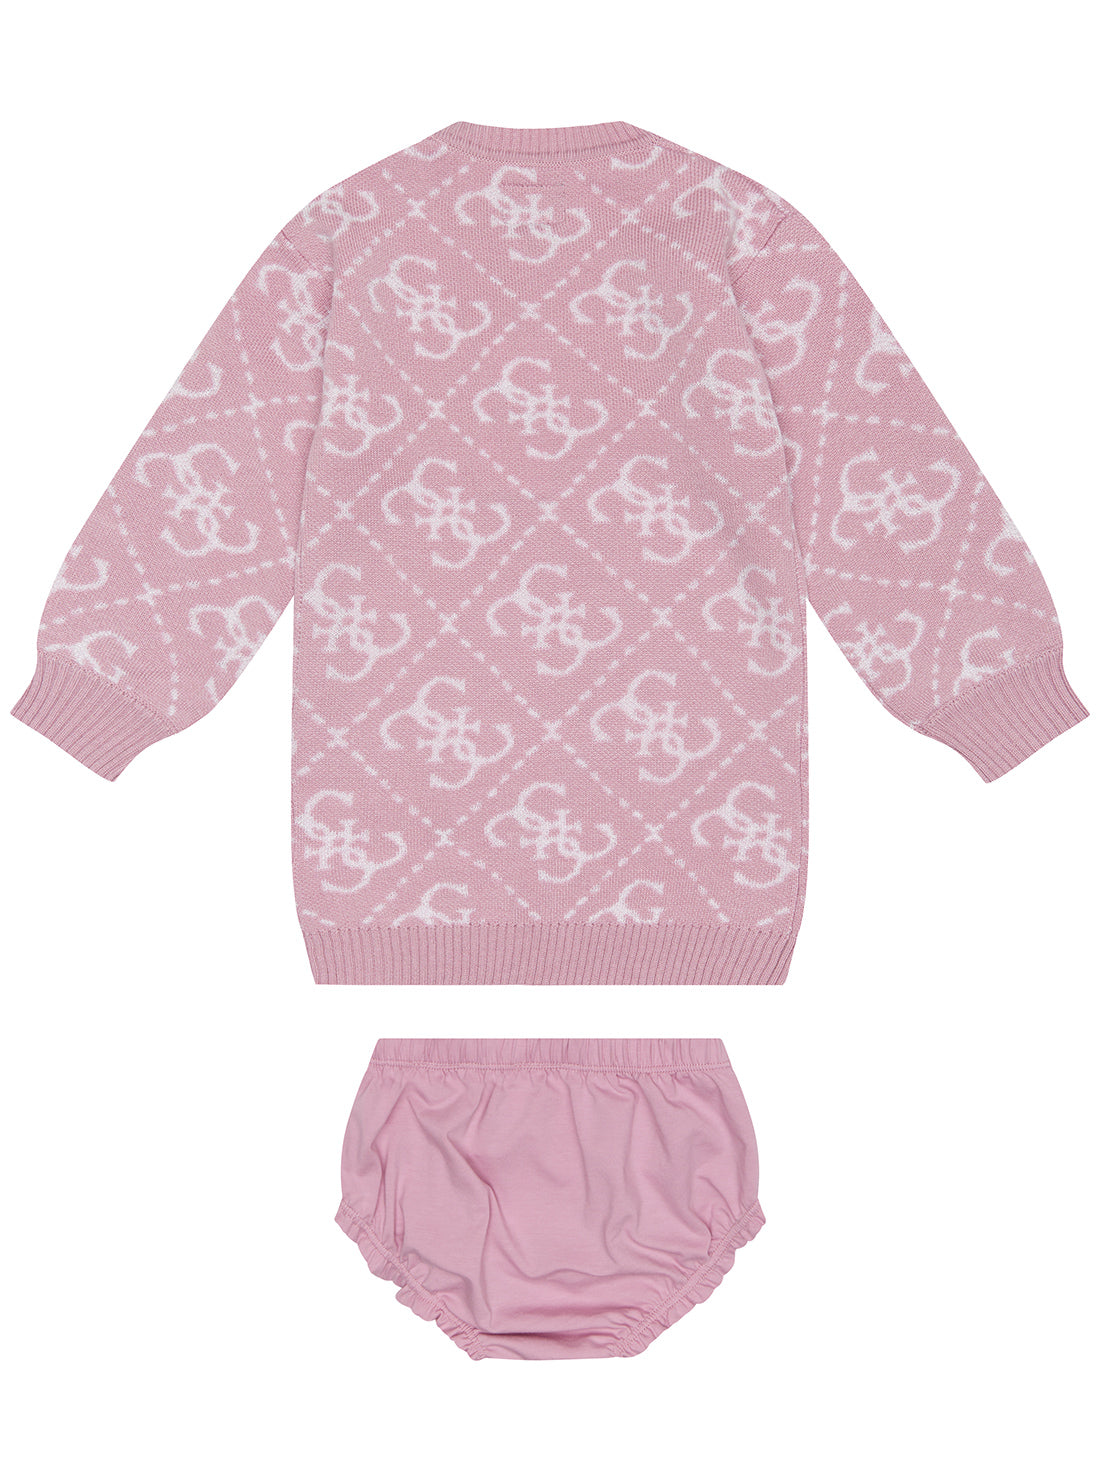 GUESS Pink Logo Sweater Dress and Panties Set (0-24M) back view